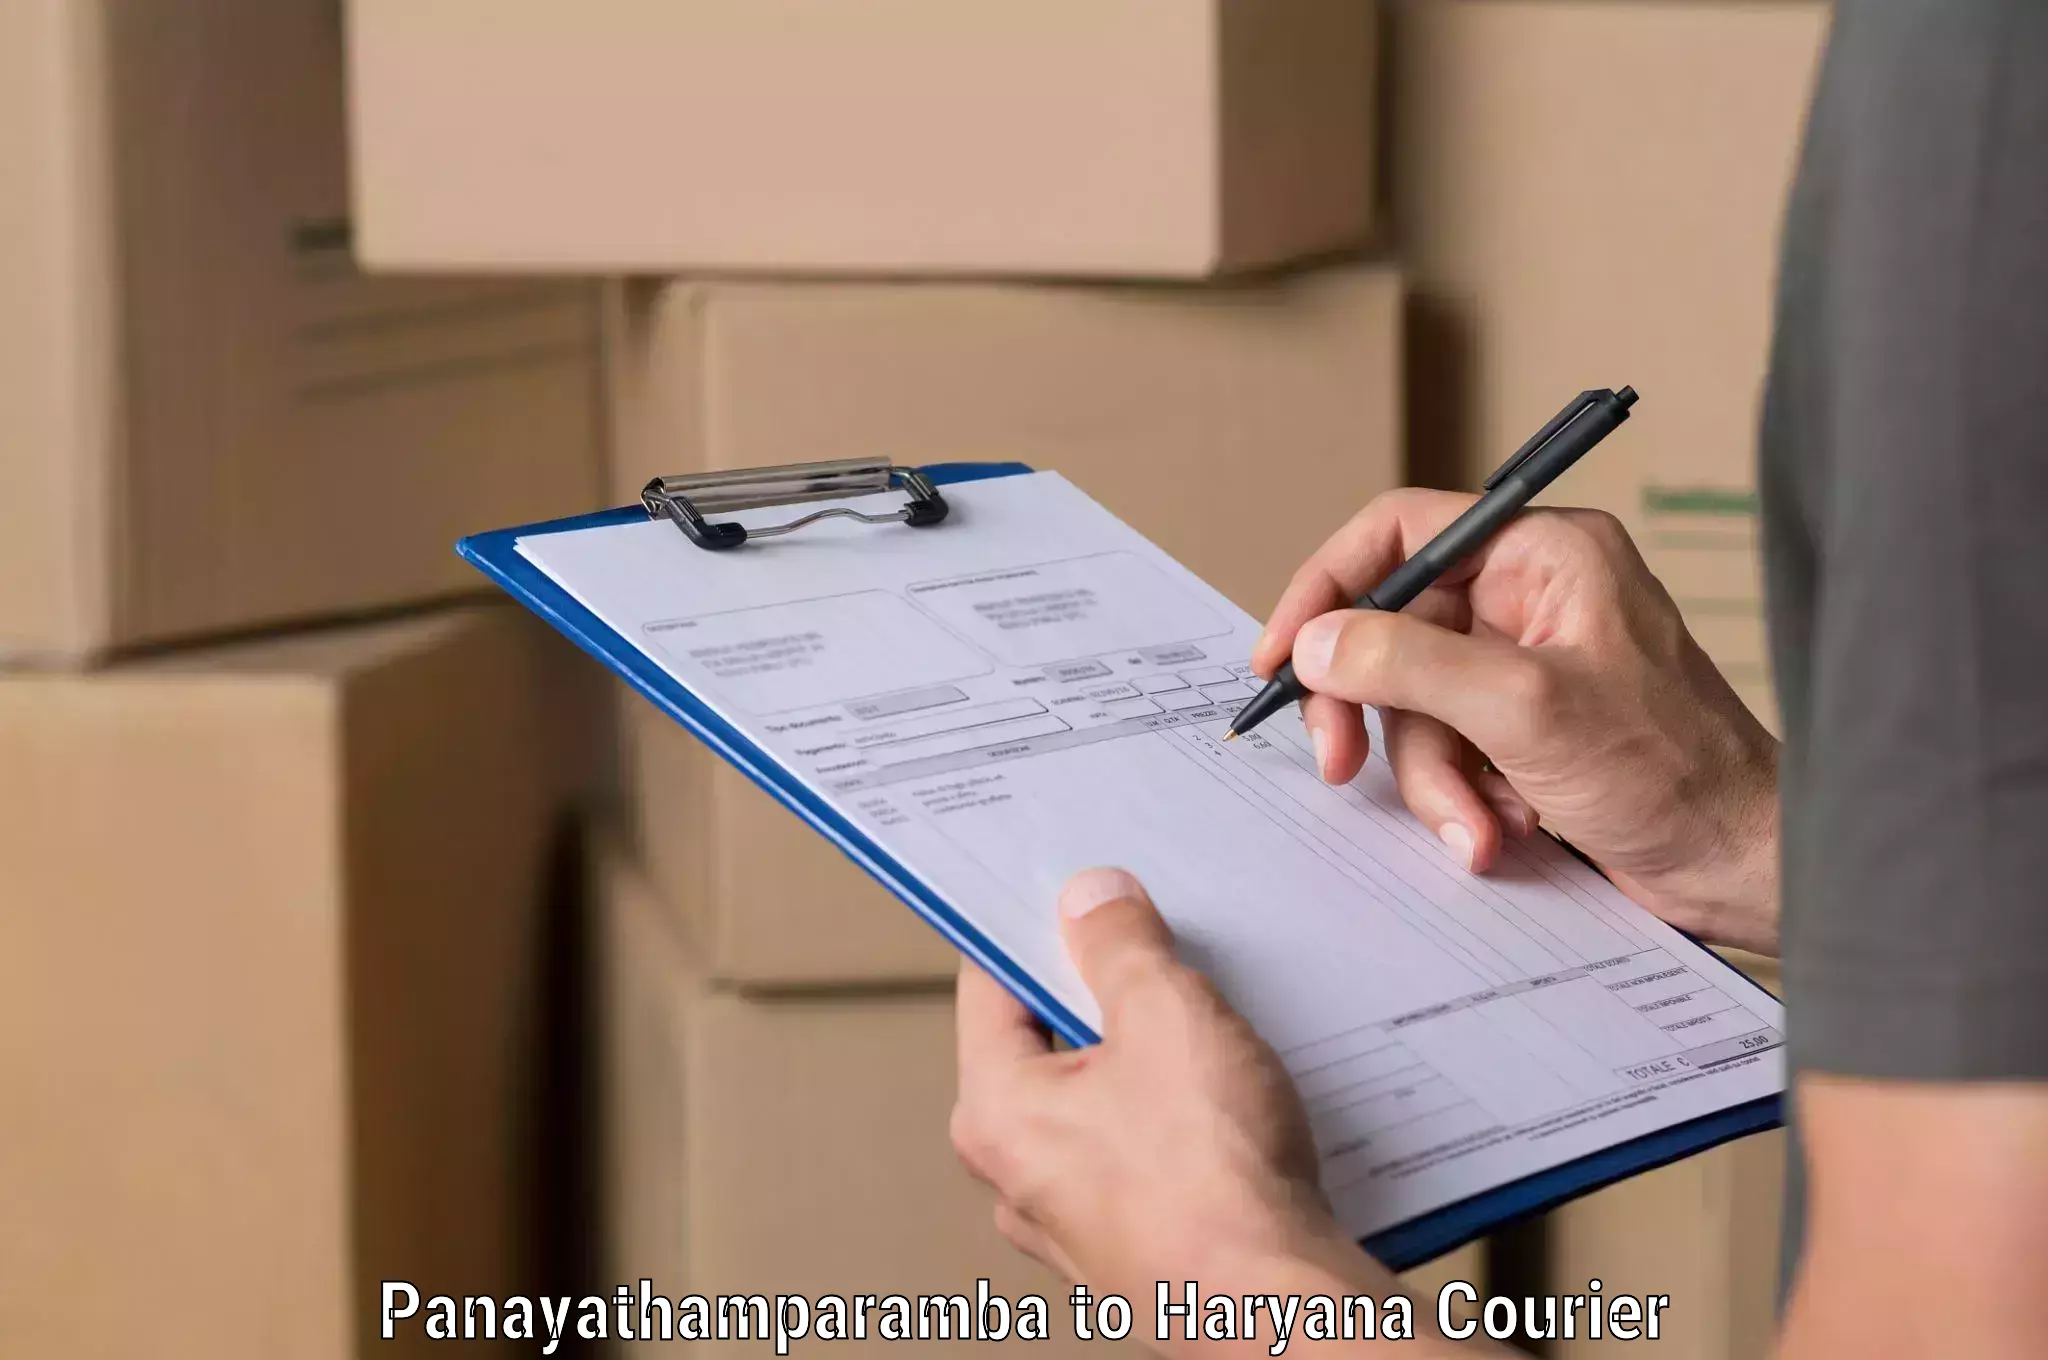 Express postal services Panayathamparamba to NCR Haryana